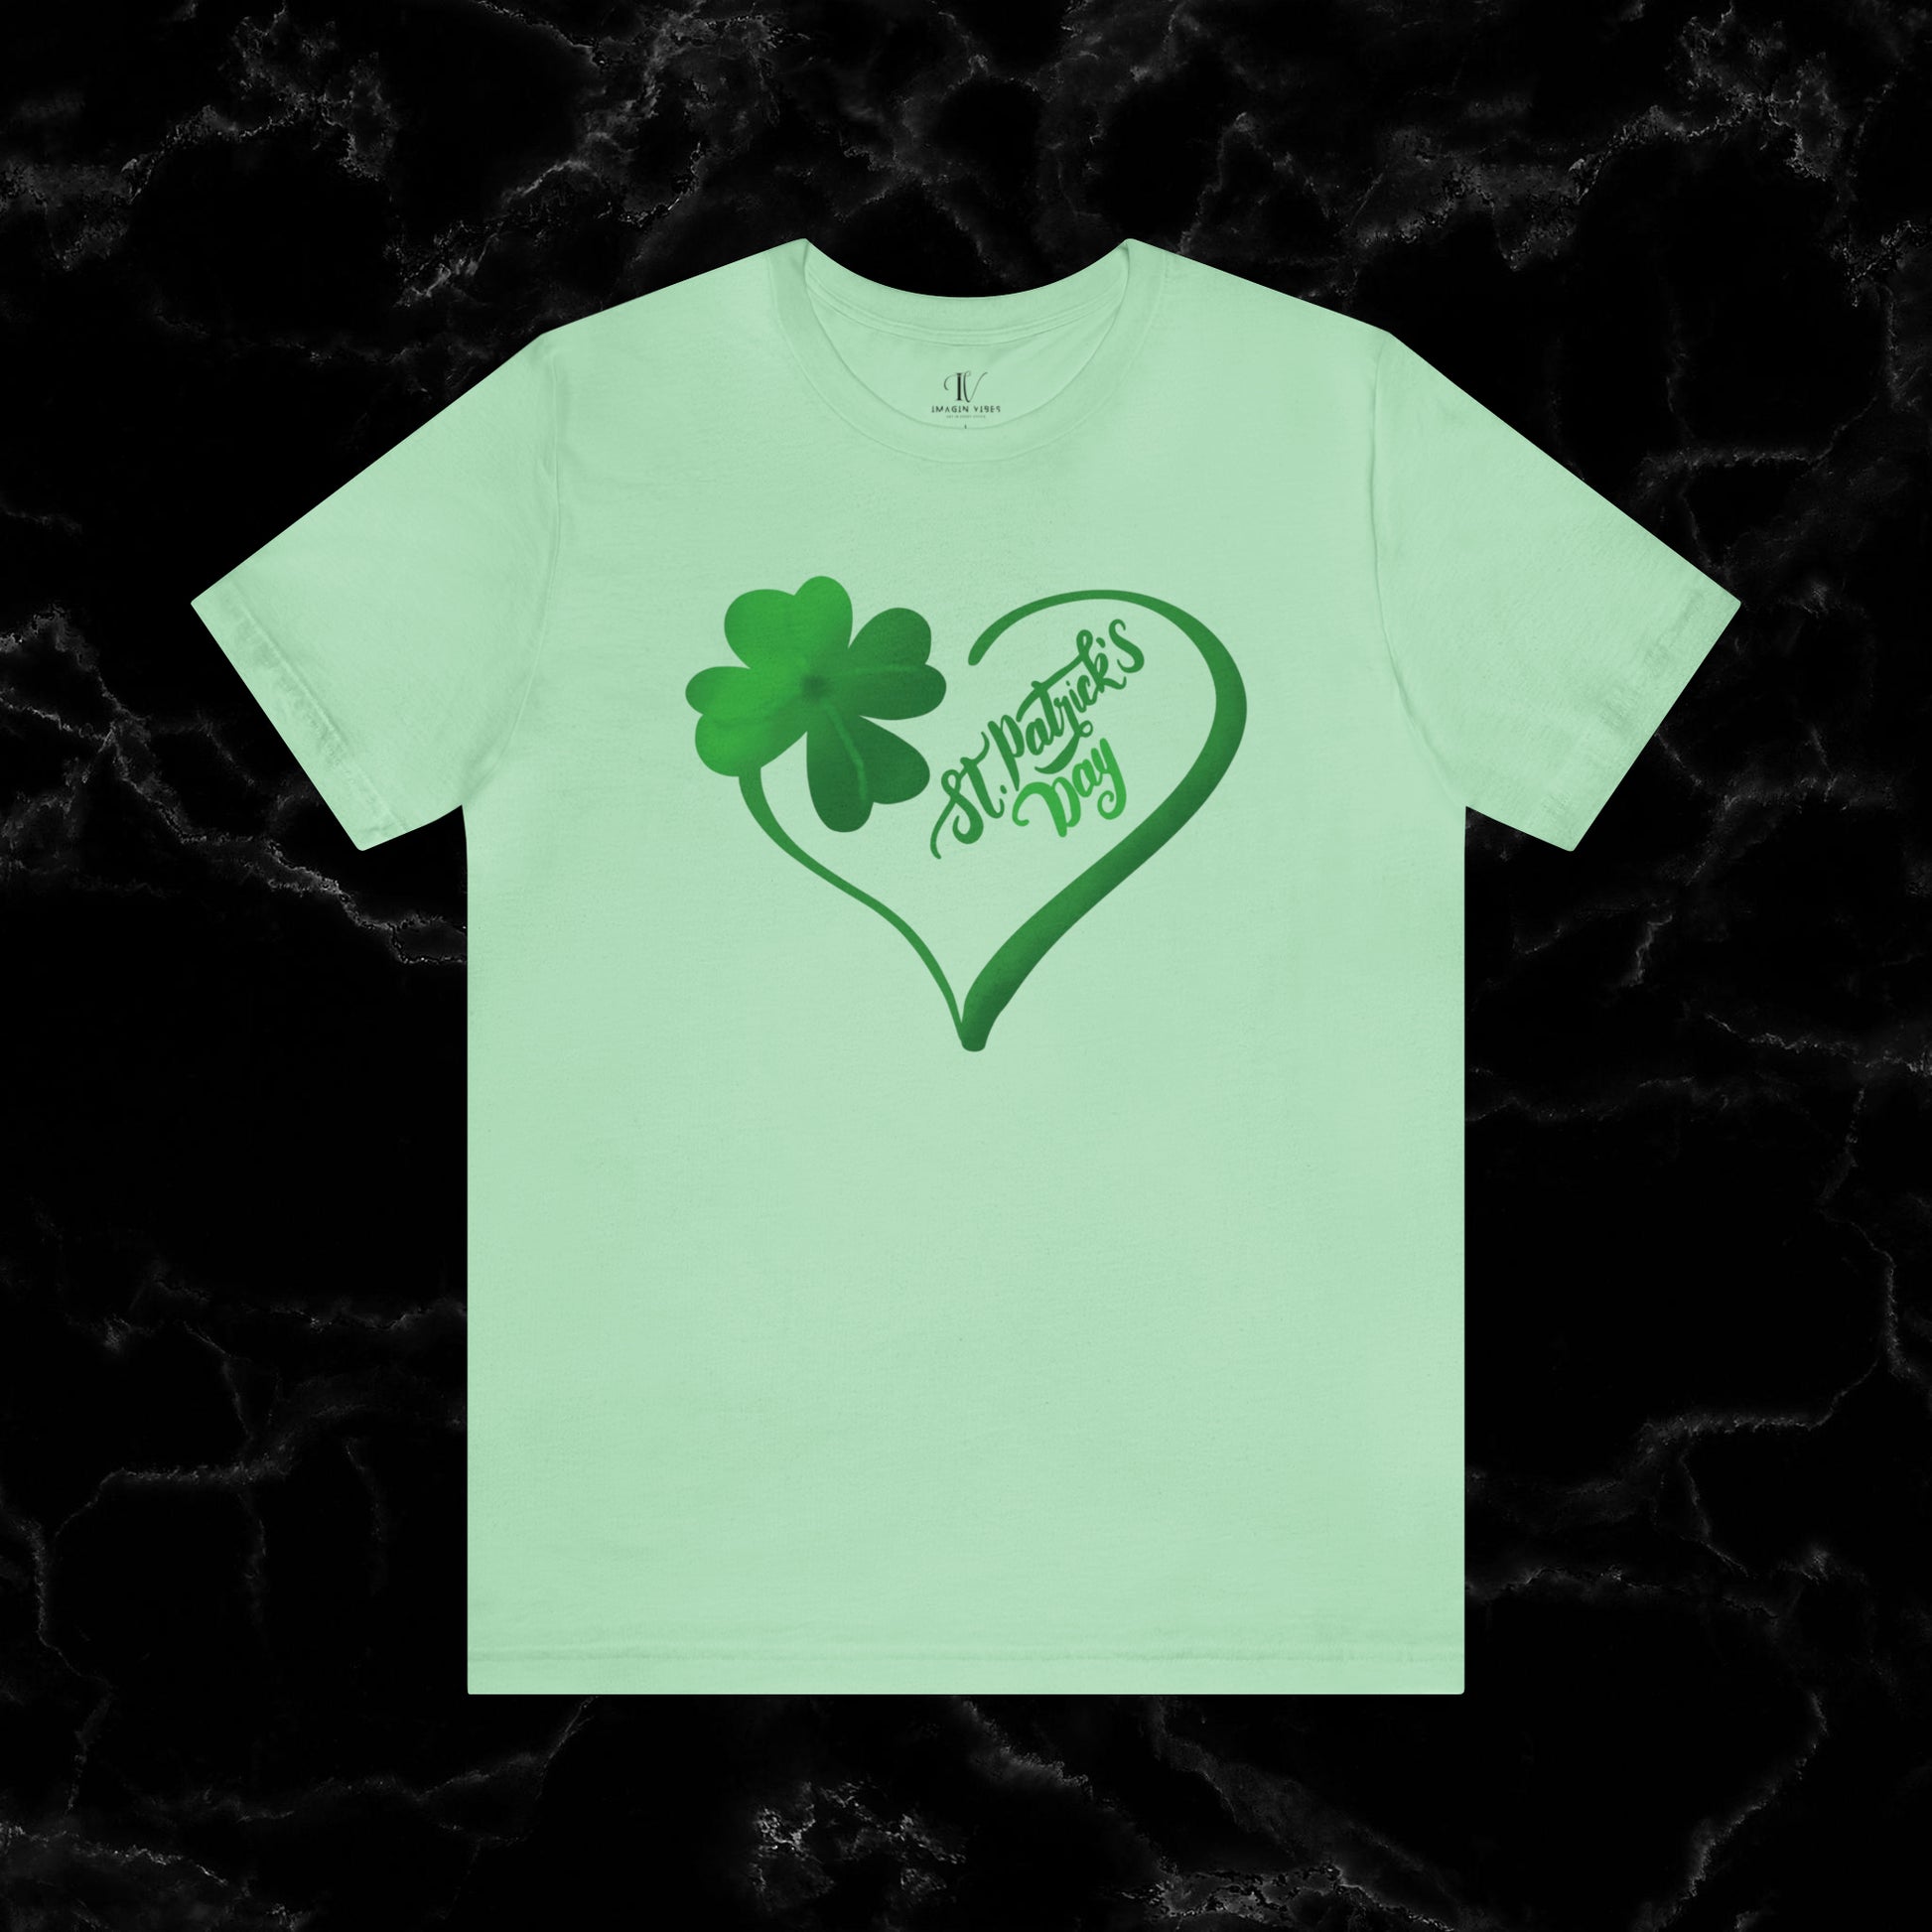 Lucky Saint Patrick's Day Shirt - St. Paddy's Day Lucky Irish Shamrock Leaf Clover Flag Beer T-Shirt T-Shirt Mint XS 